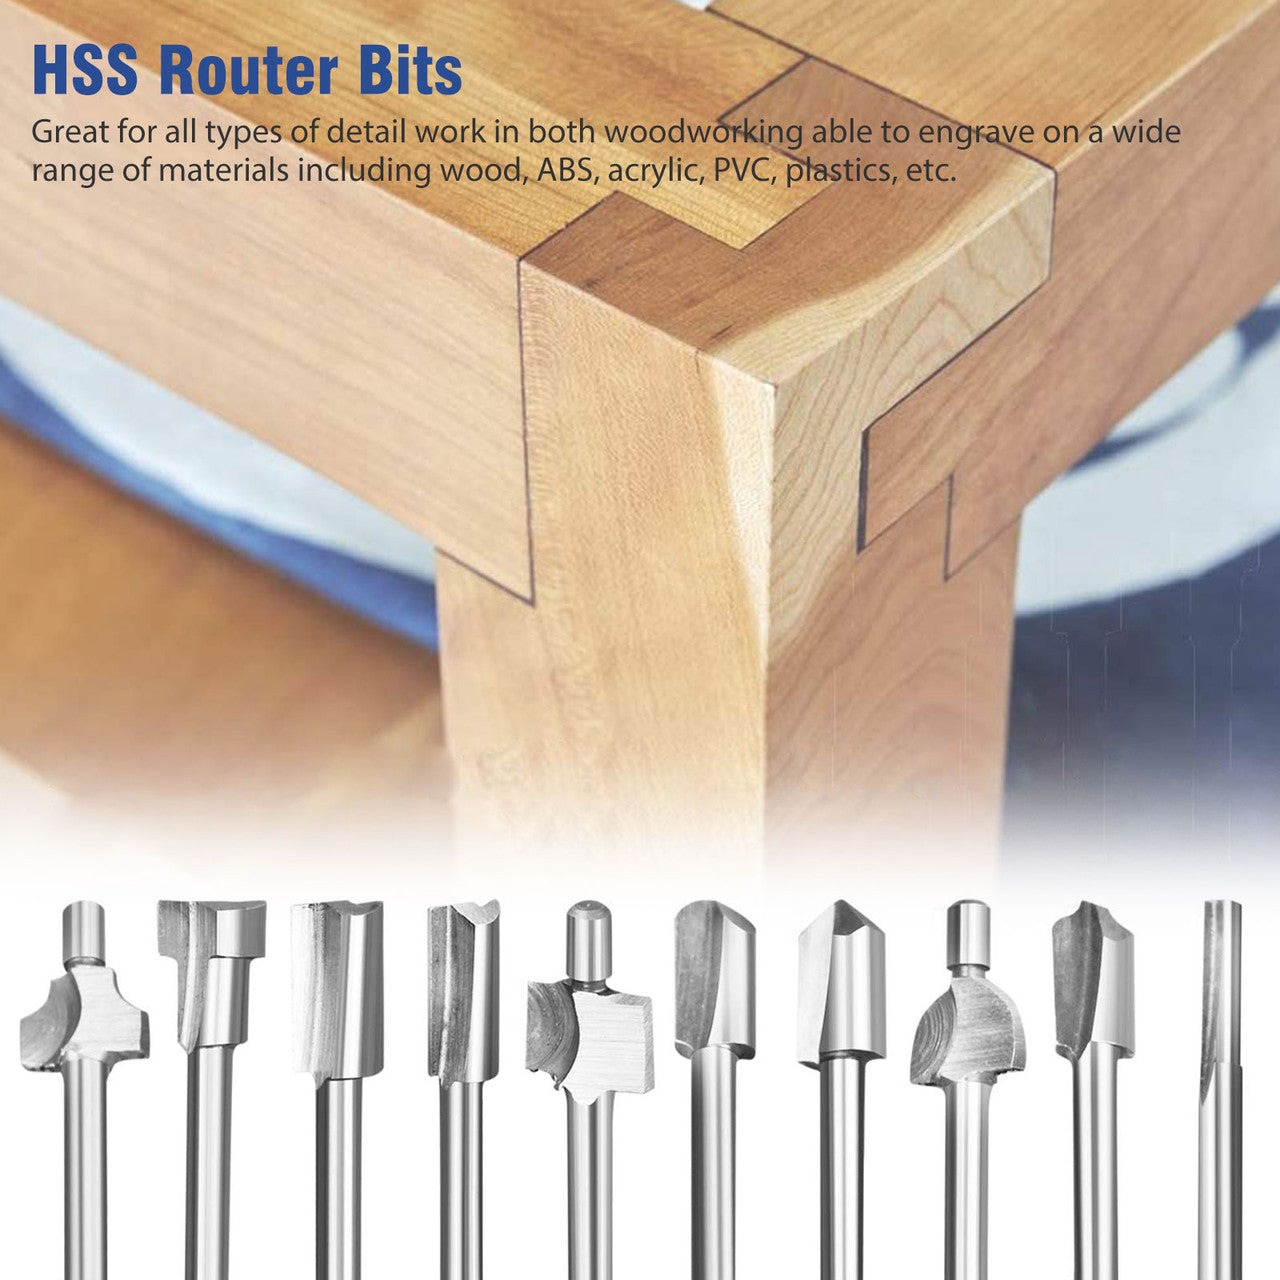 10Pcs 1/8"(3mm) Shank HSS Rotary Router Bits Tool & 5Pcs Drill Bit Router Carbide Engraving Bits Set Titanium Router Bit Cutter for Dremel, DIY Woodwork, Carving, Edge Treatment Grooving Wood